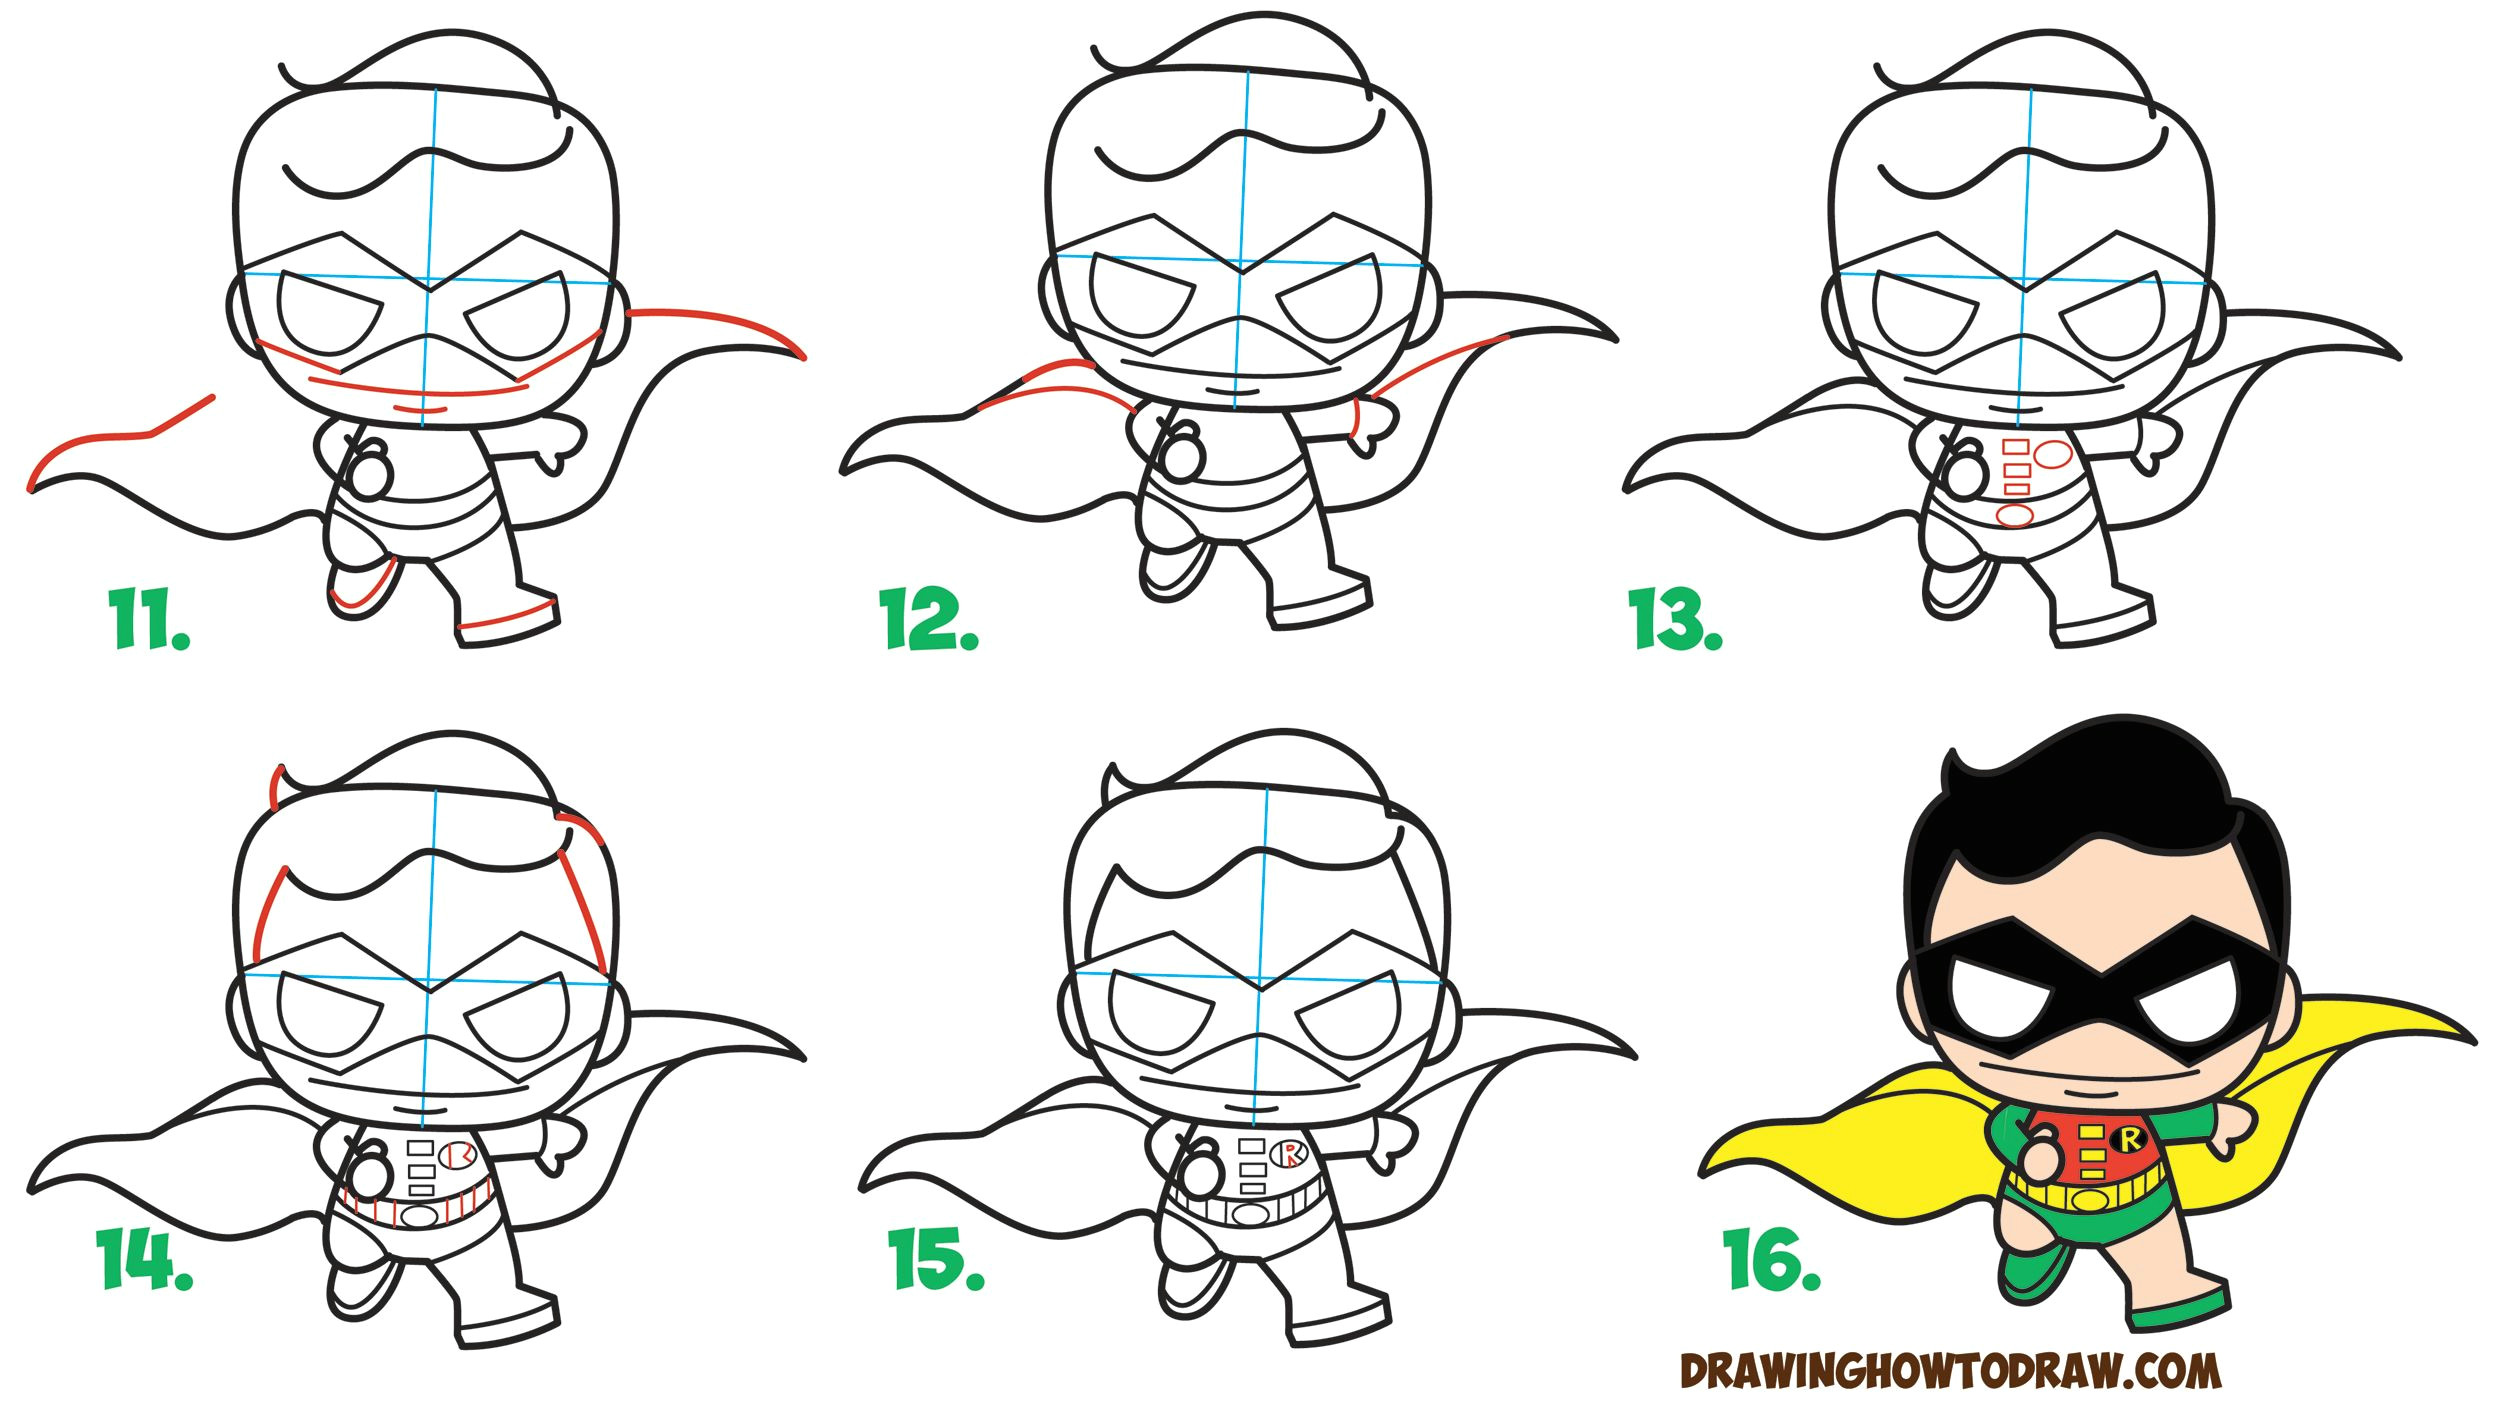 Easy Drawings Robin How to Draw Cute Kawaii Chibi Robin From Dc Comics Batman